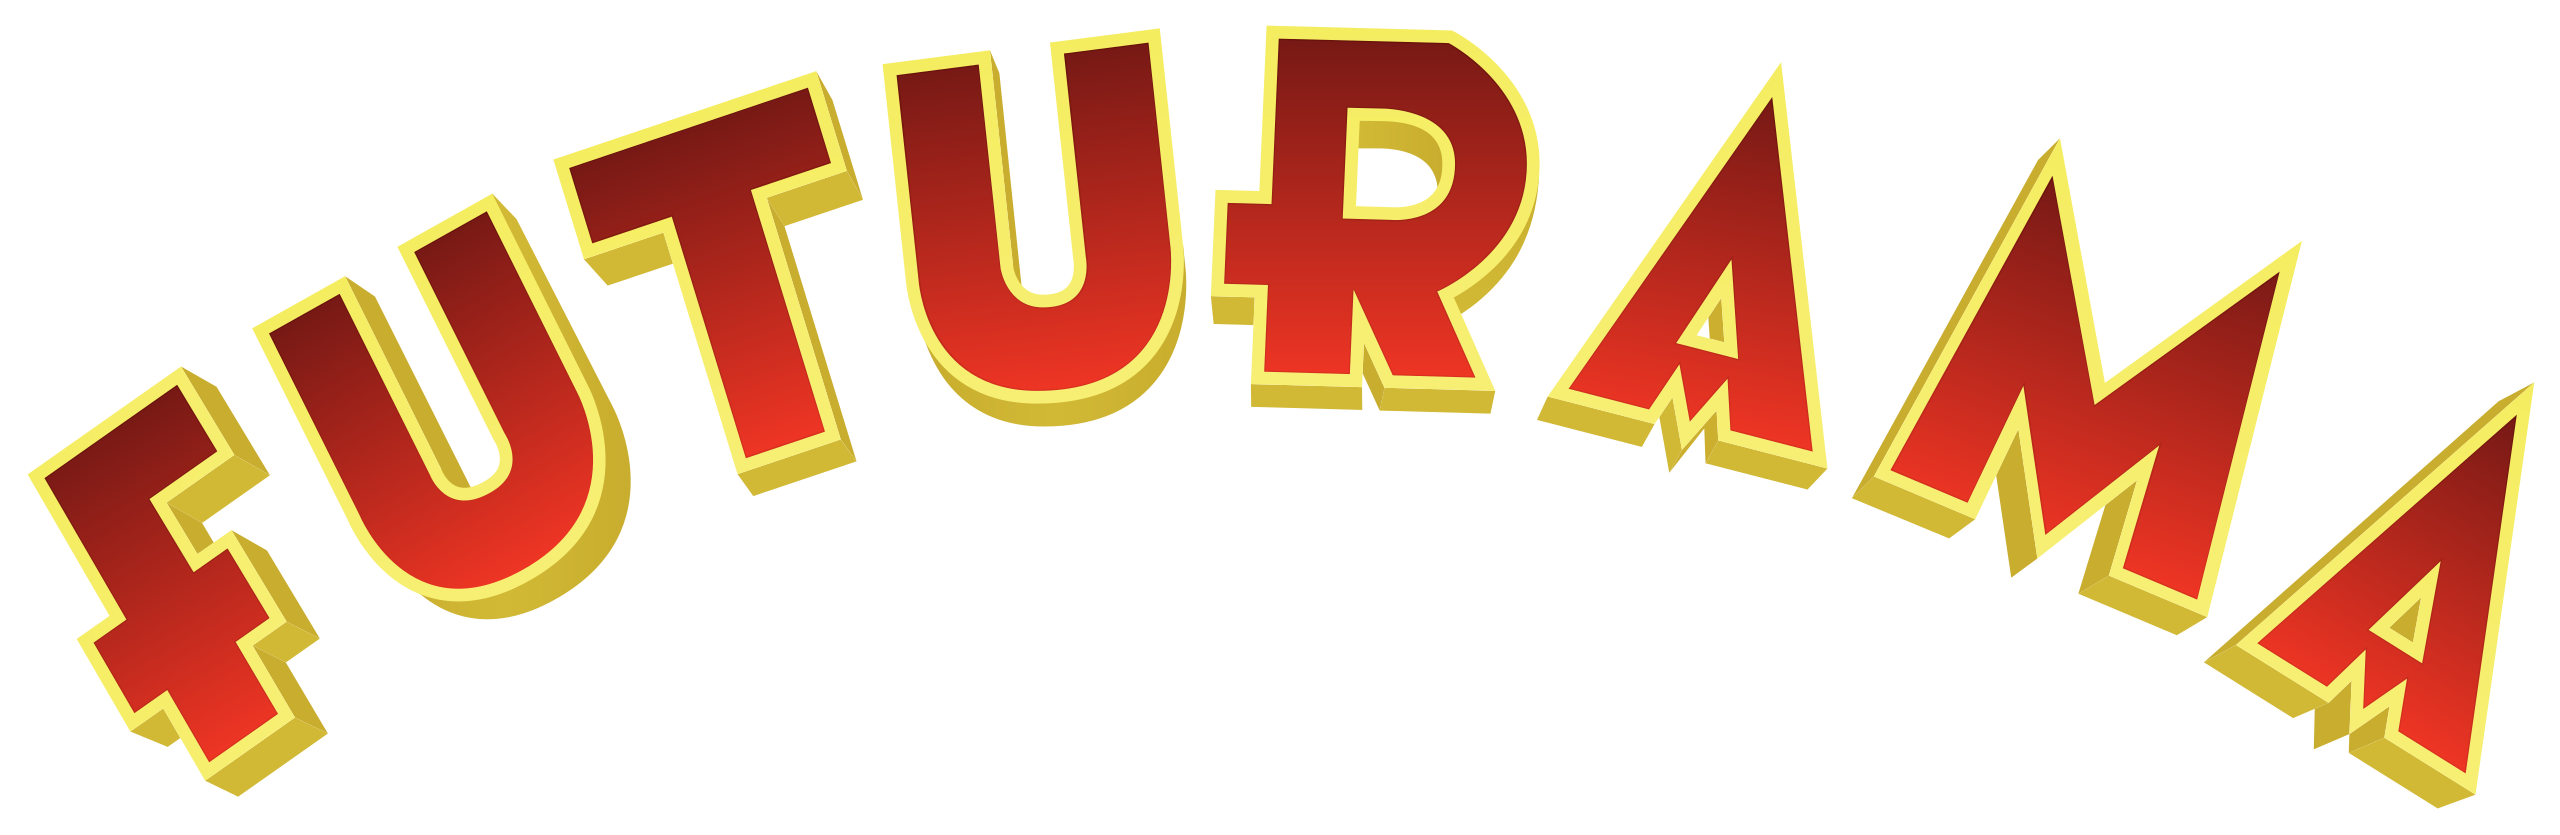 Файл:Futurama 1999 logo.svg — Википедия